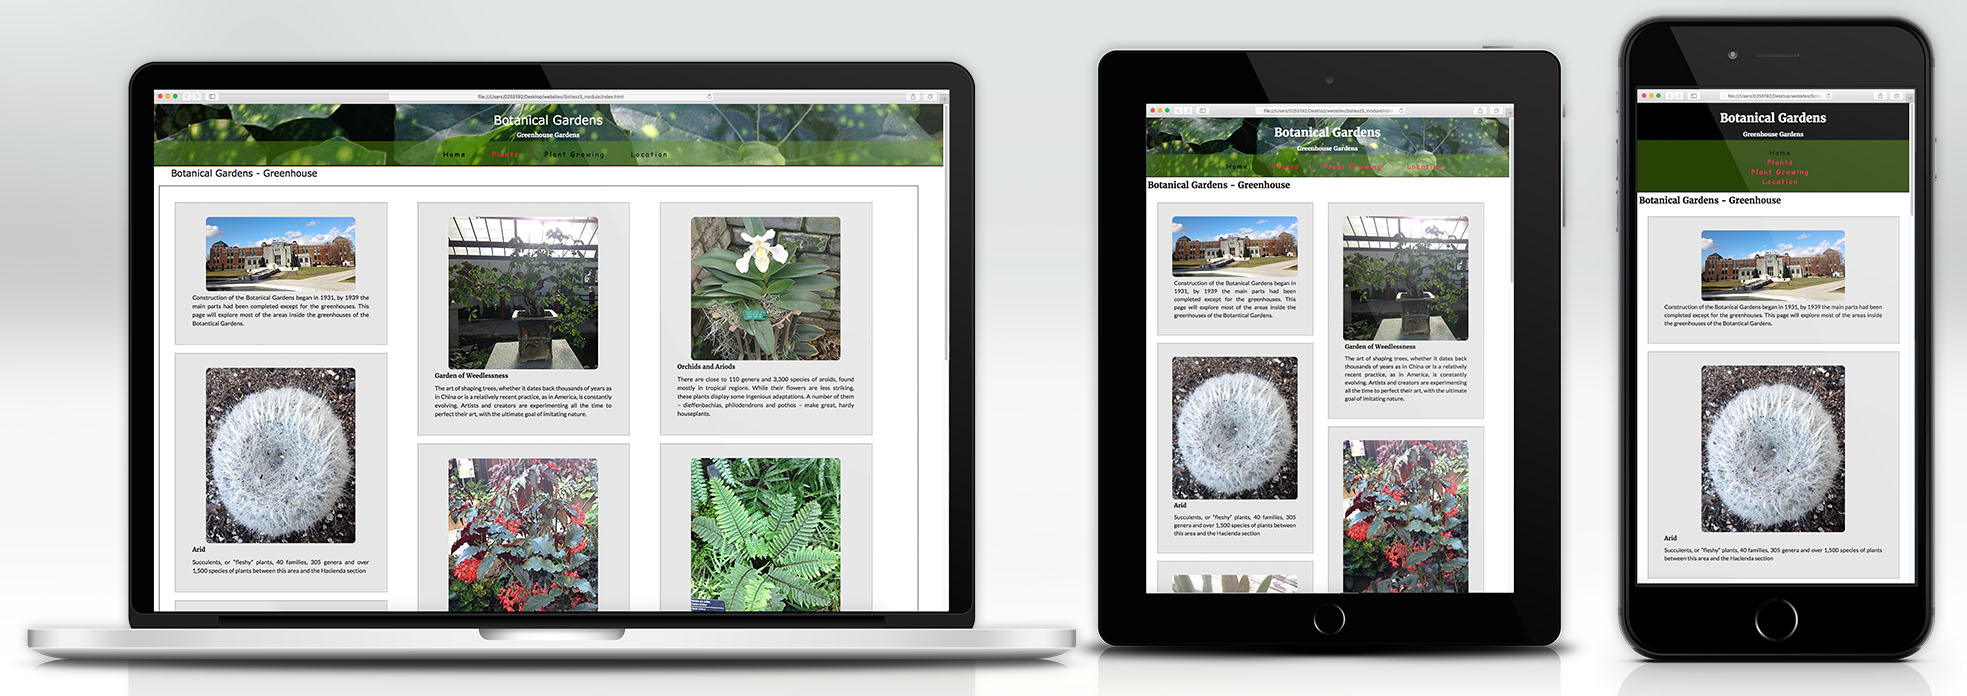 website about the botanical garden